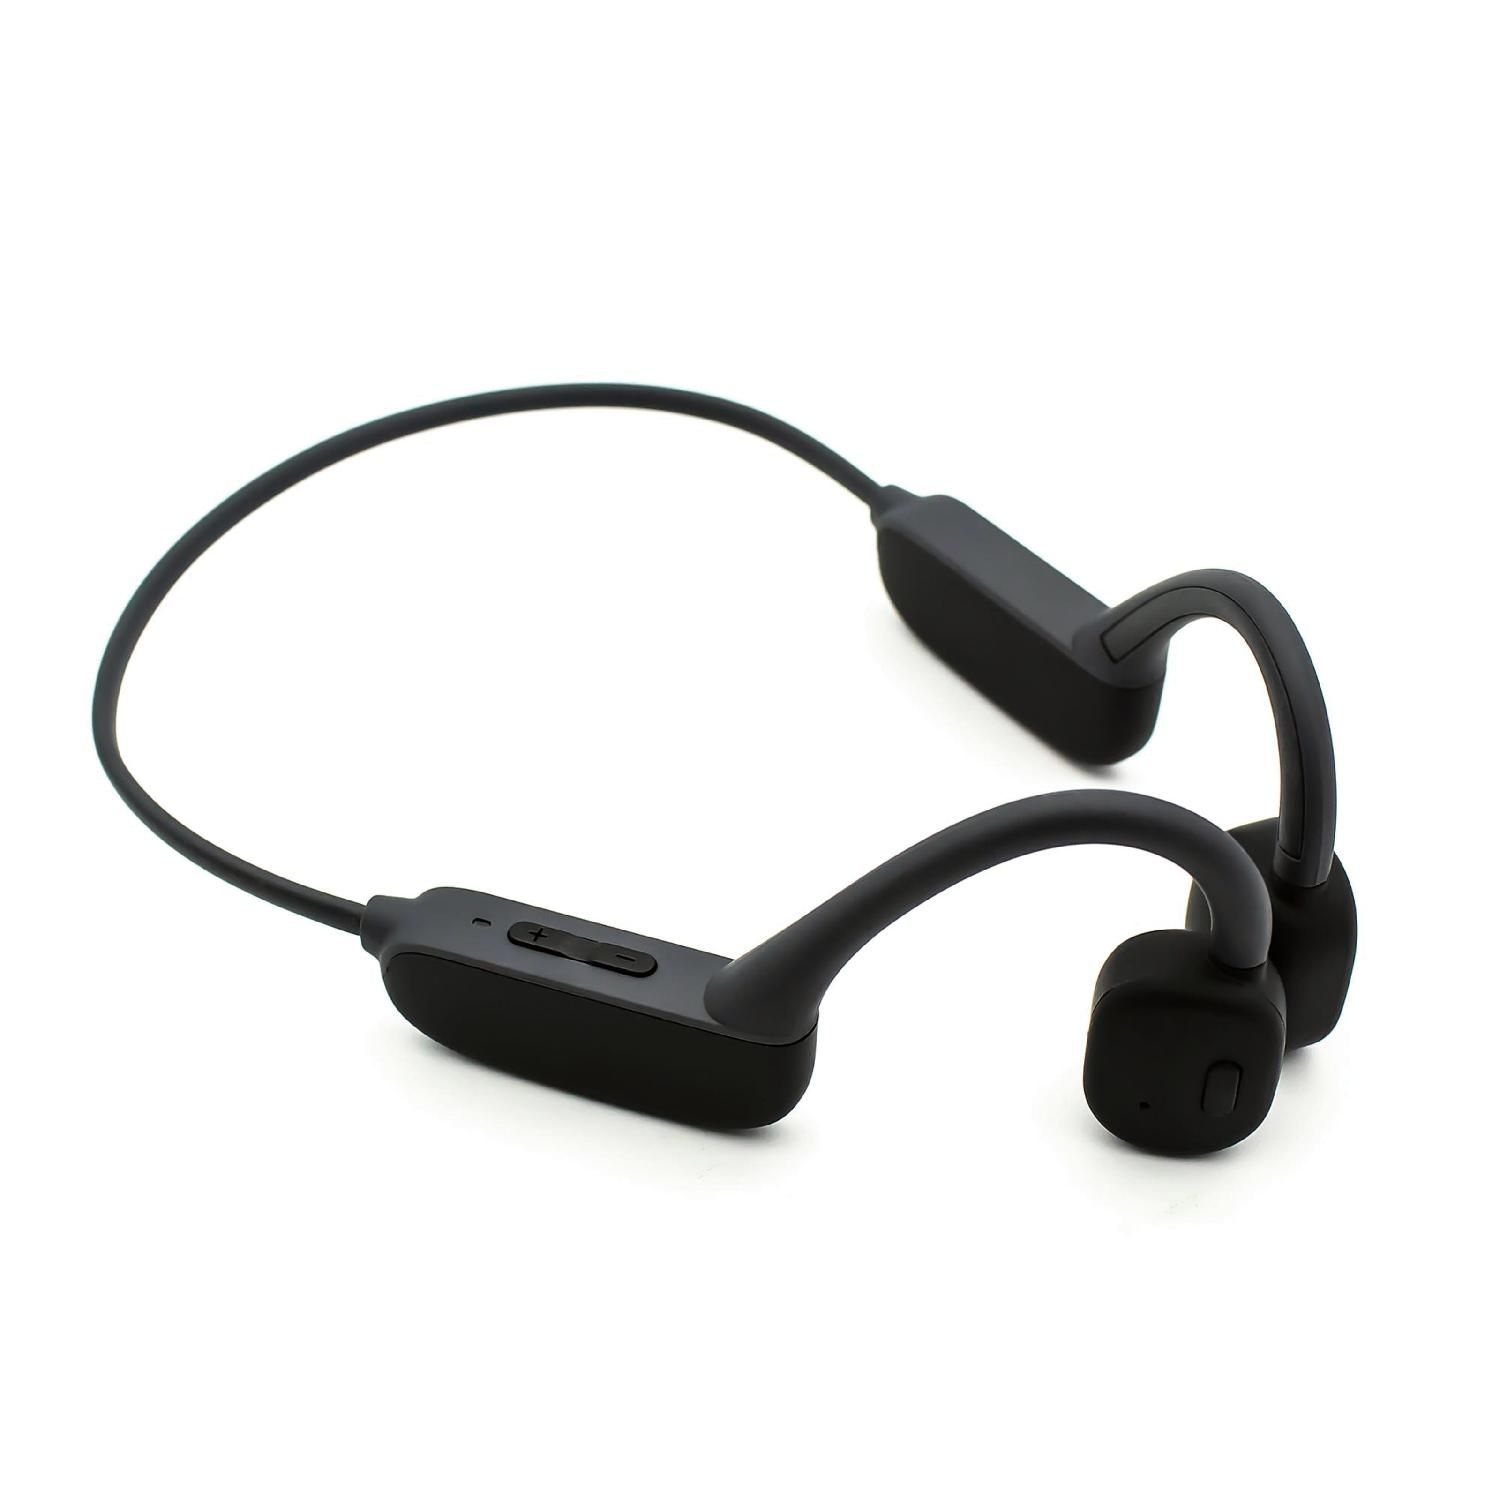 2, Headset Neckband bluTC IMPERIAL schwarz active